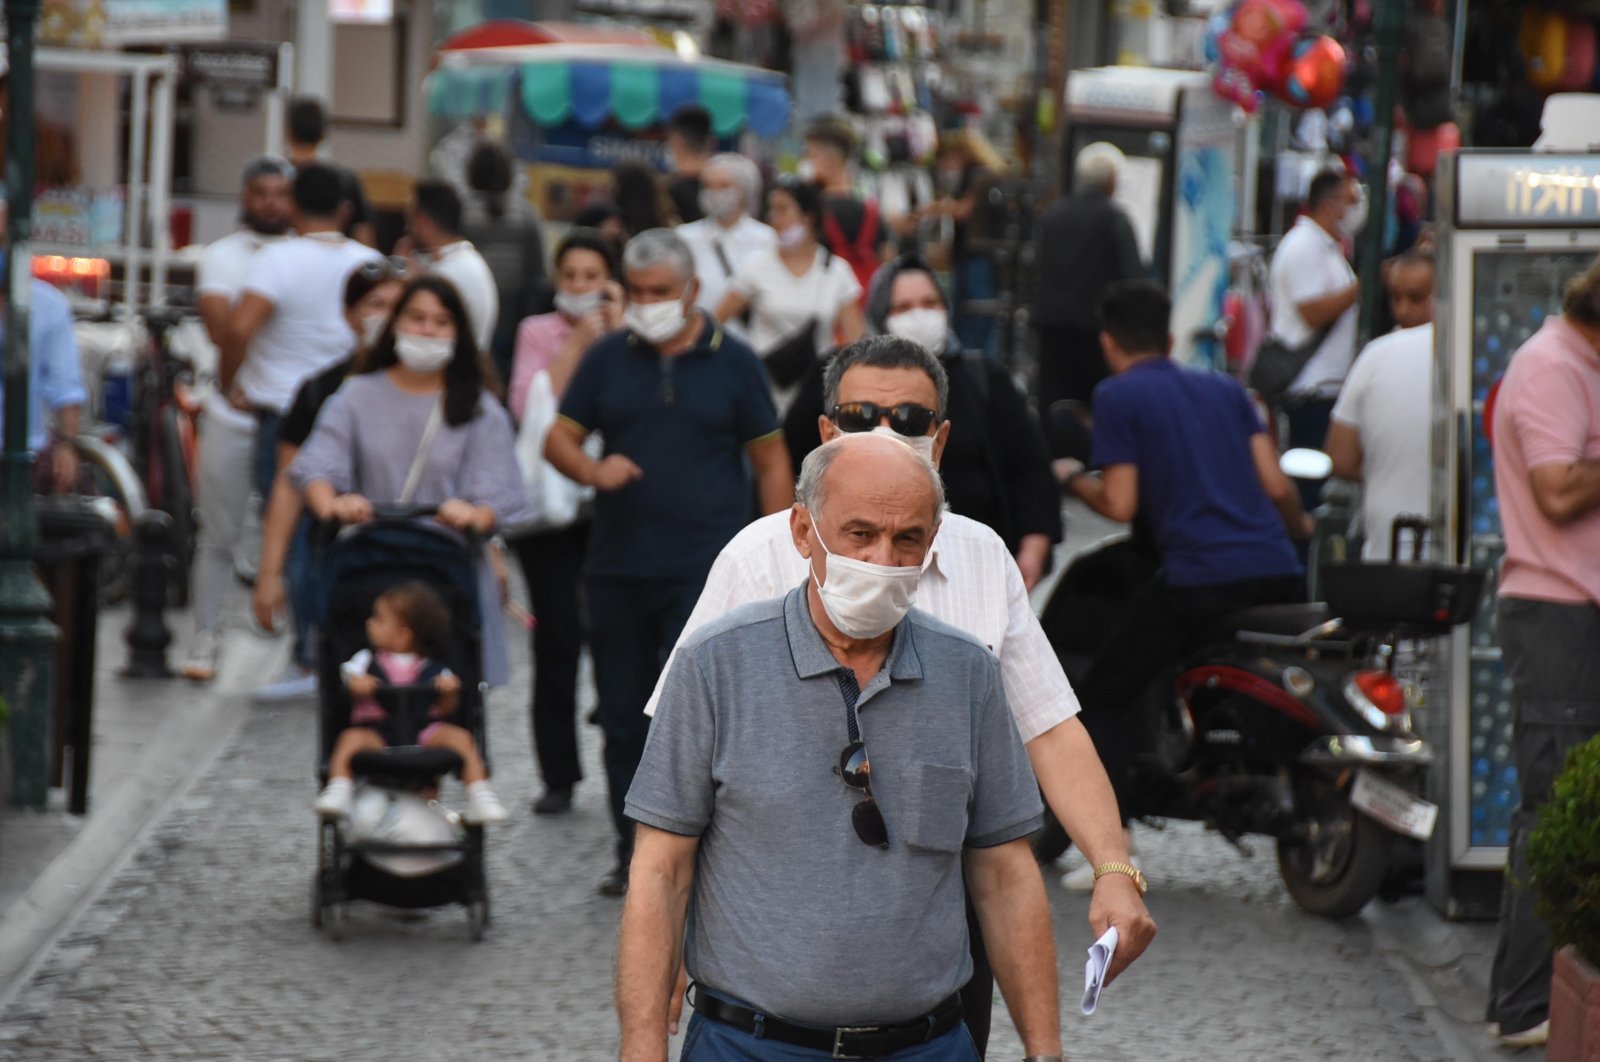 People wearing protective masks walk on a street in Eskişehir, central Turkey, Sept. 1, 2020. (DHA Photo)